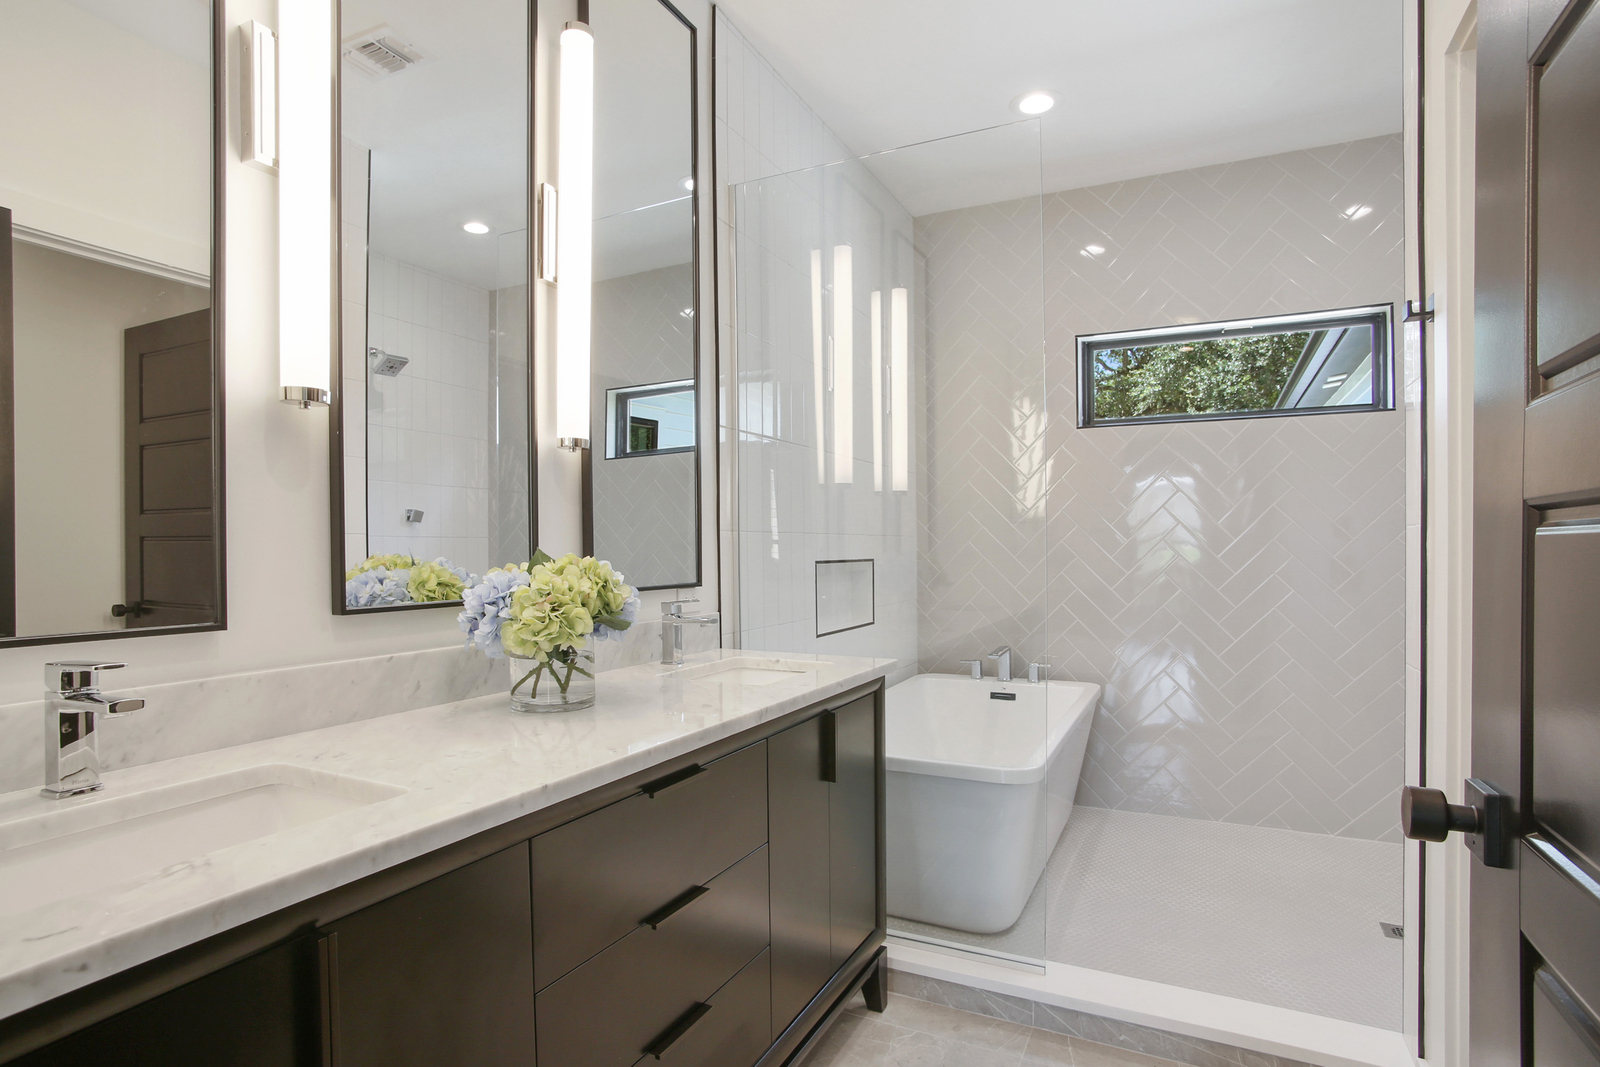 Luxury master bathroom of Pratt House new construction custom home designed and built by DMG